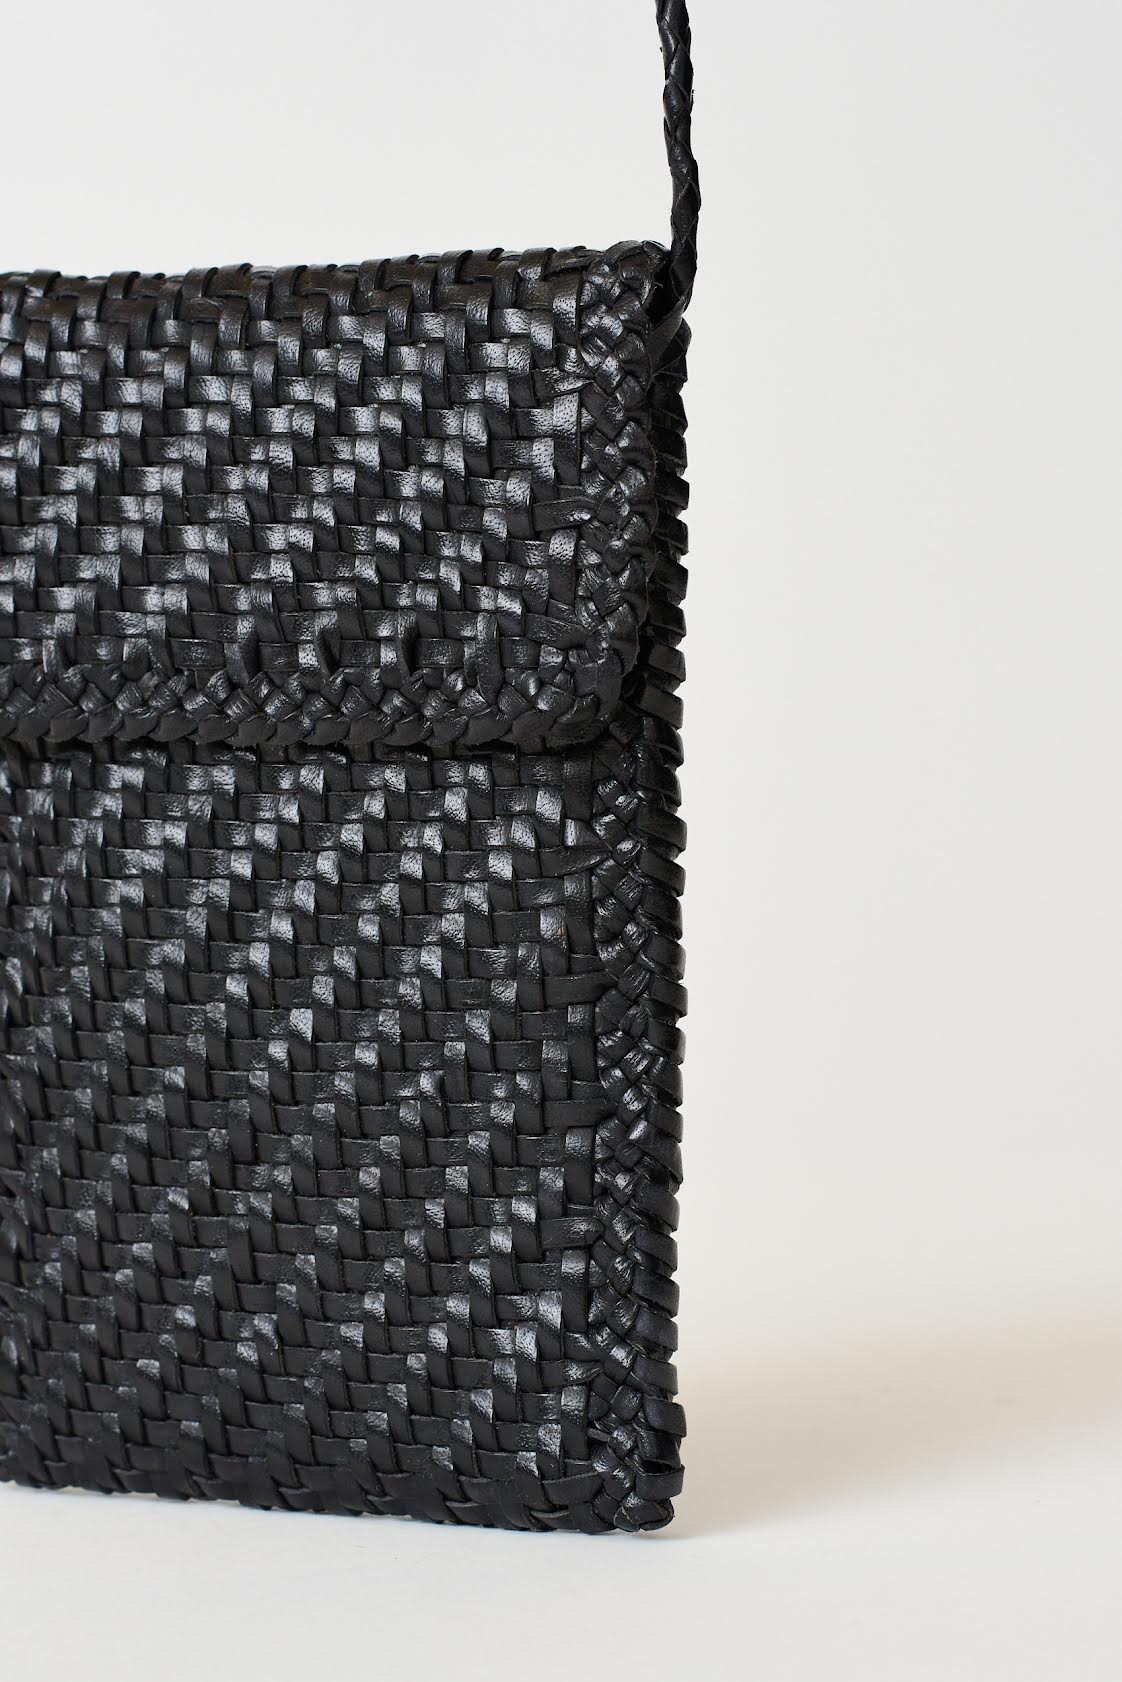 Dragon Diffusion - Black woven leather cross-body phone bag